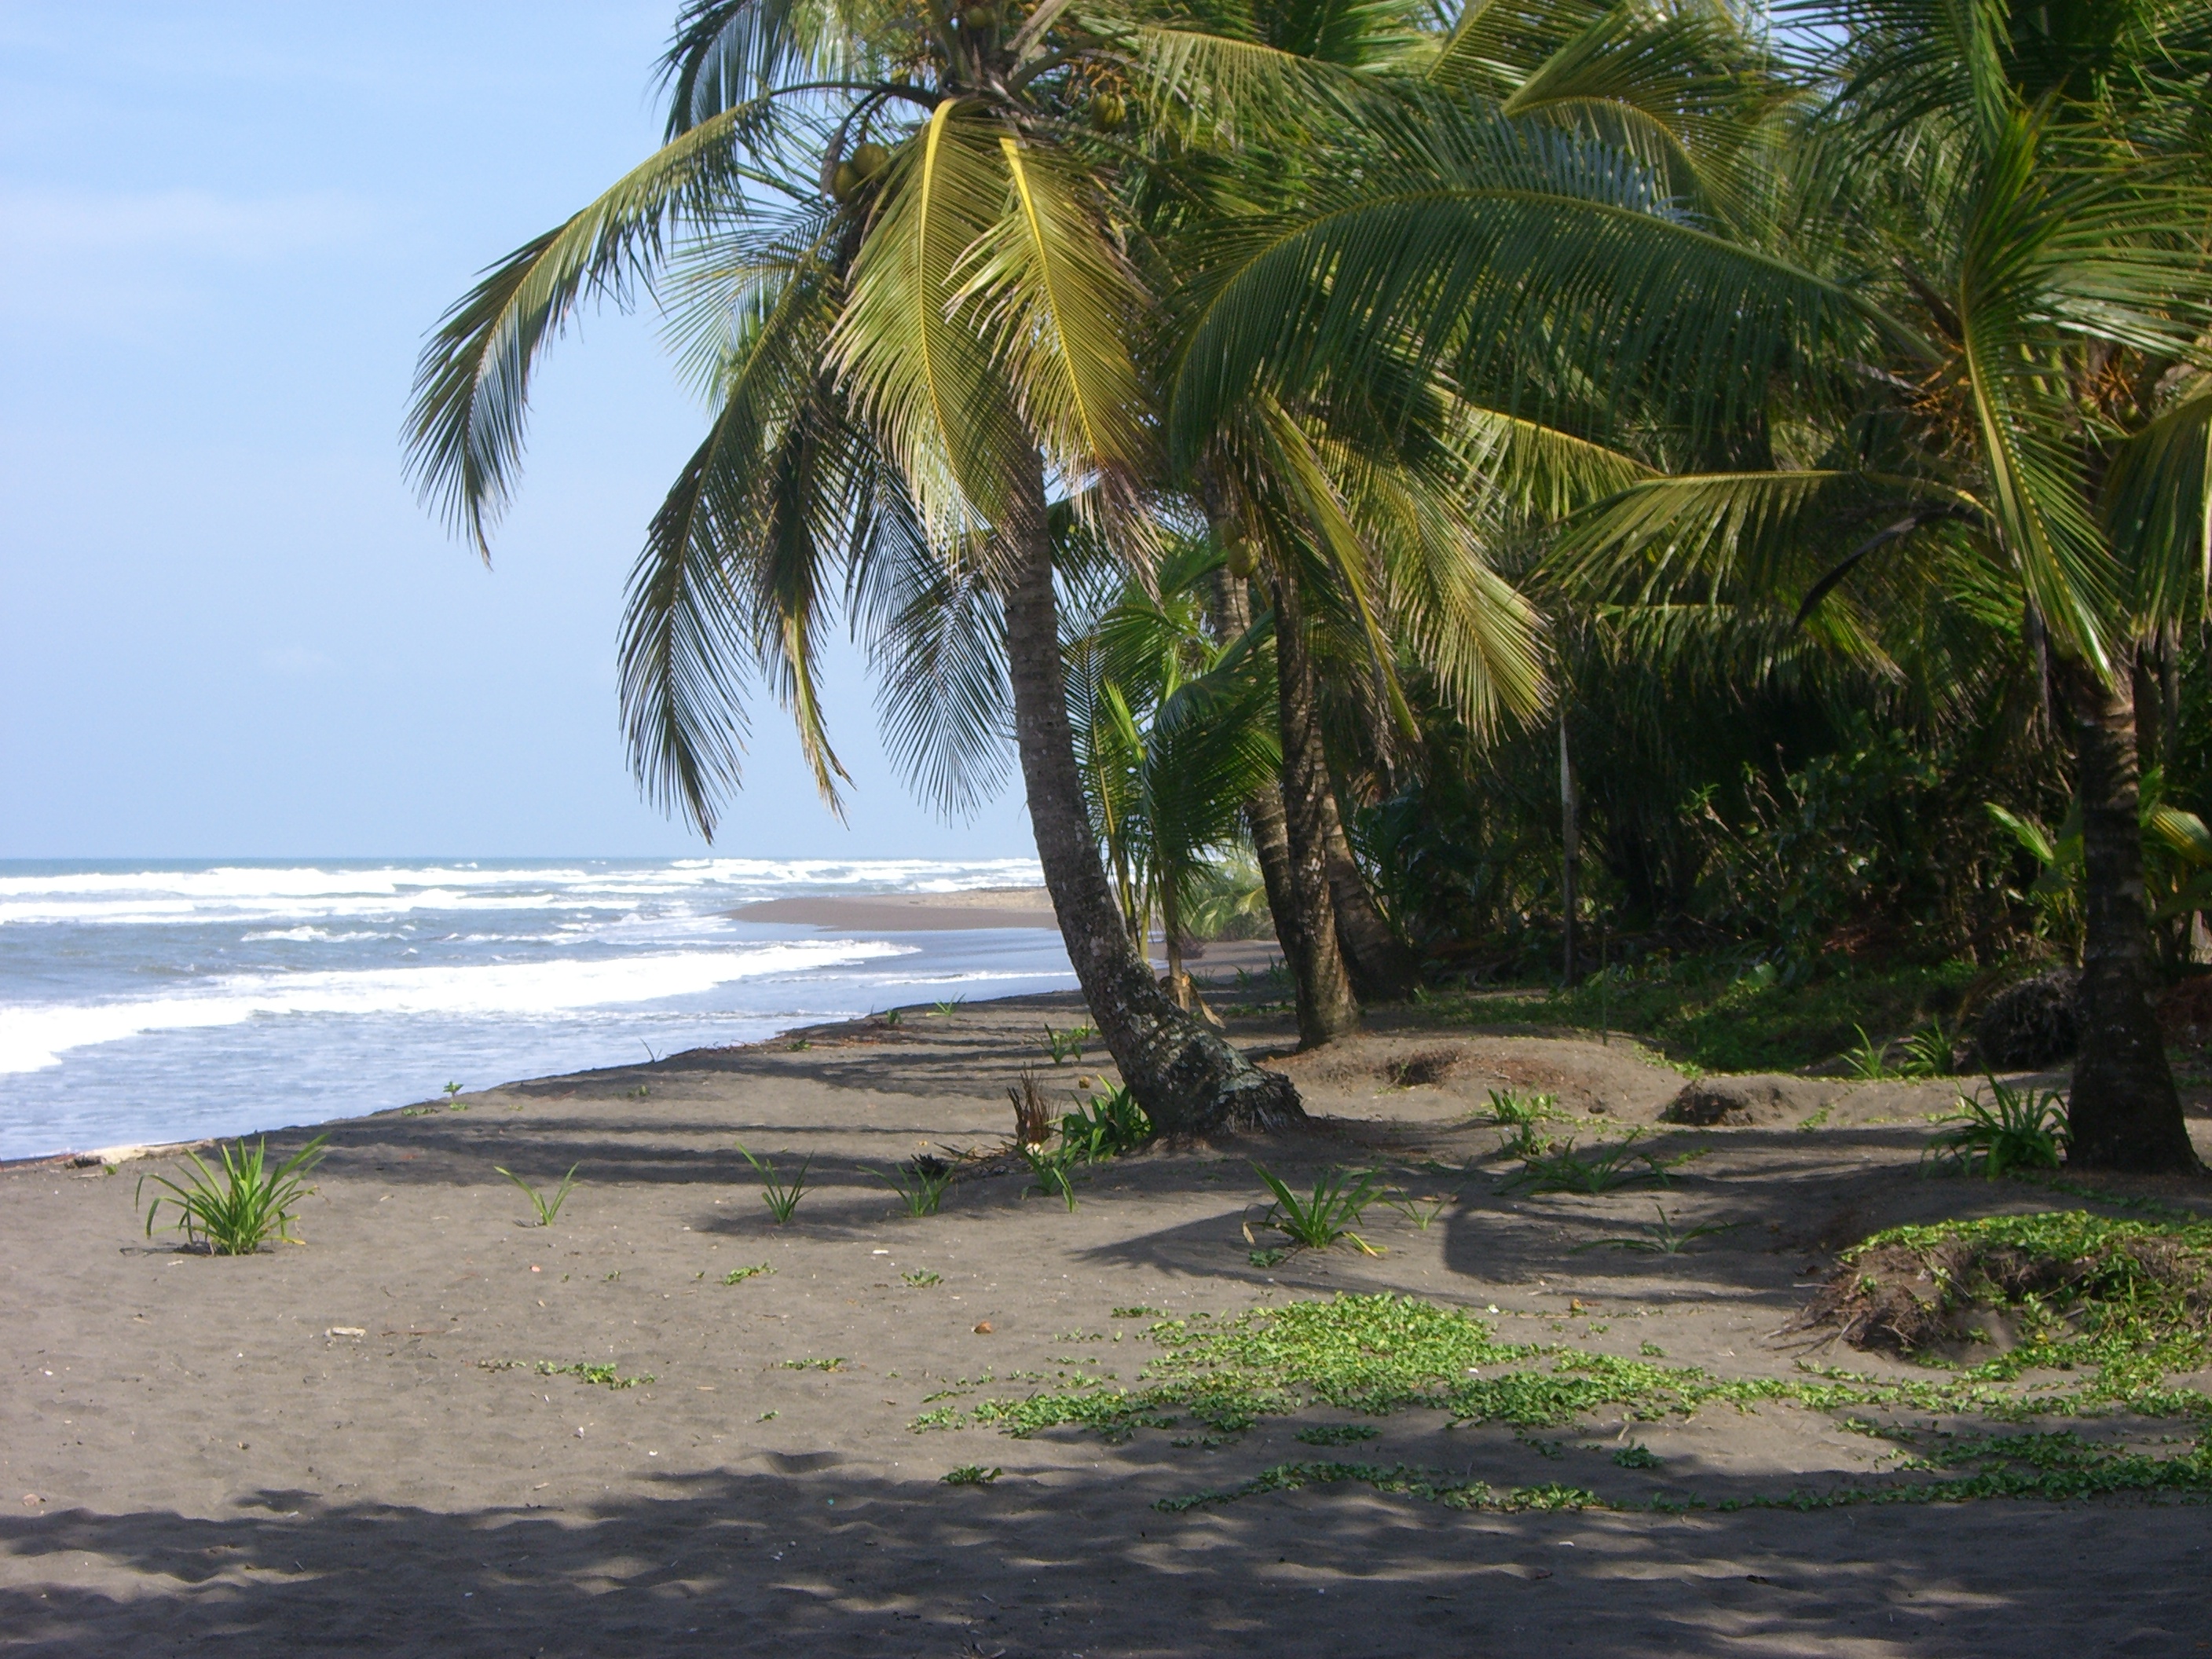 La plage de Tortuguera au Costa Rica Photo: Pixabay